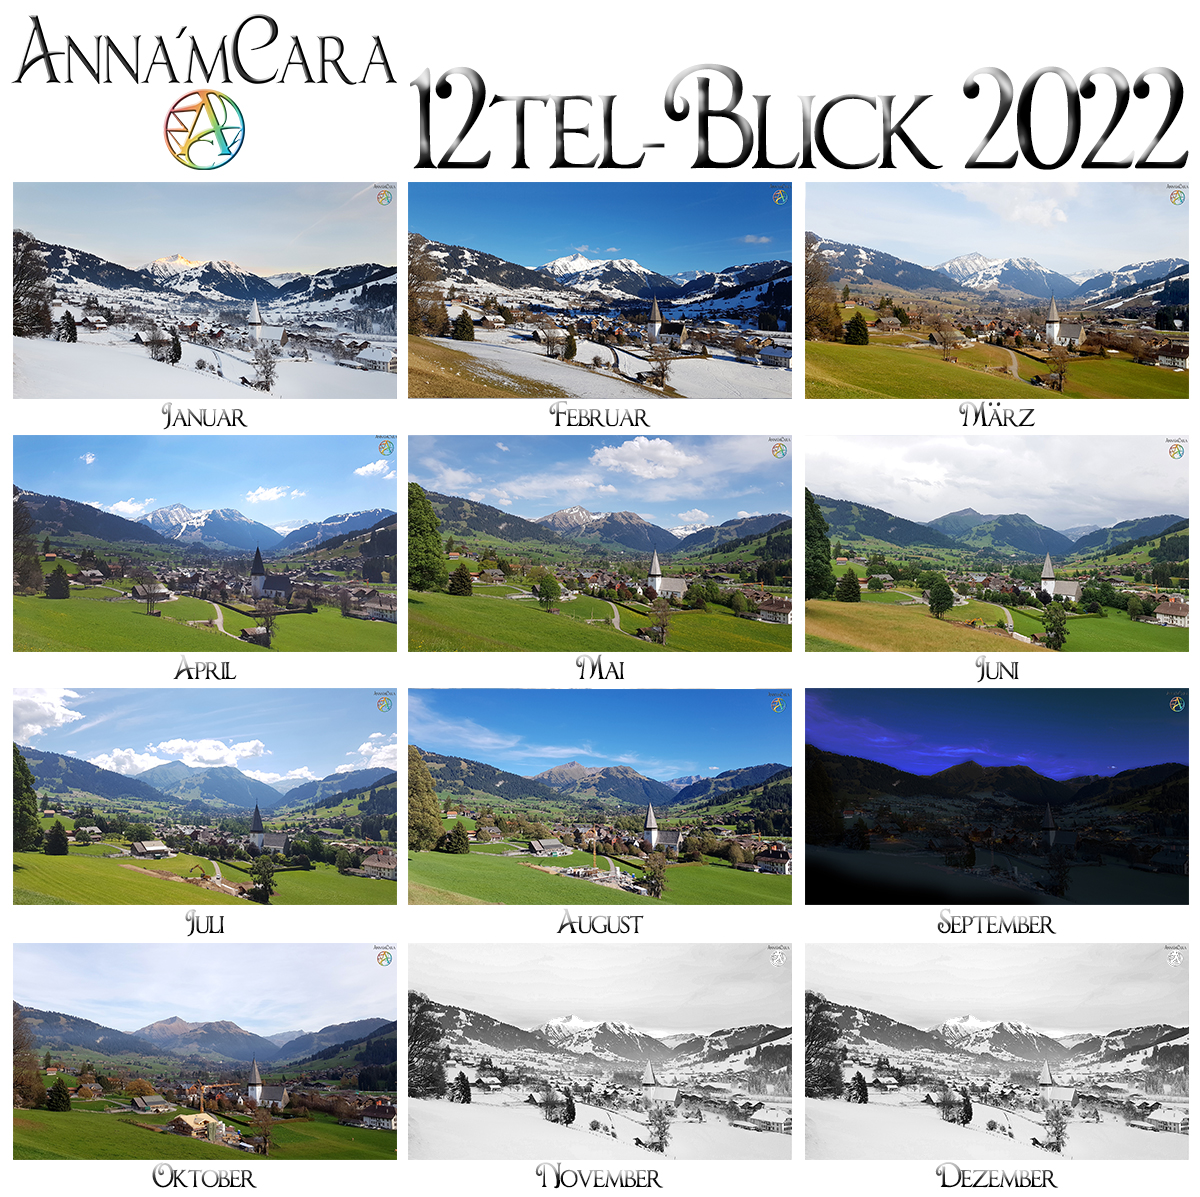 Anna'mCara-Blog - 12tel-Blick - Jahresblick - Gstaad - Oktober